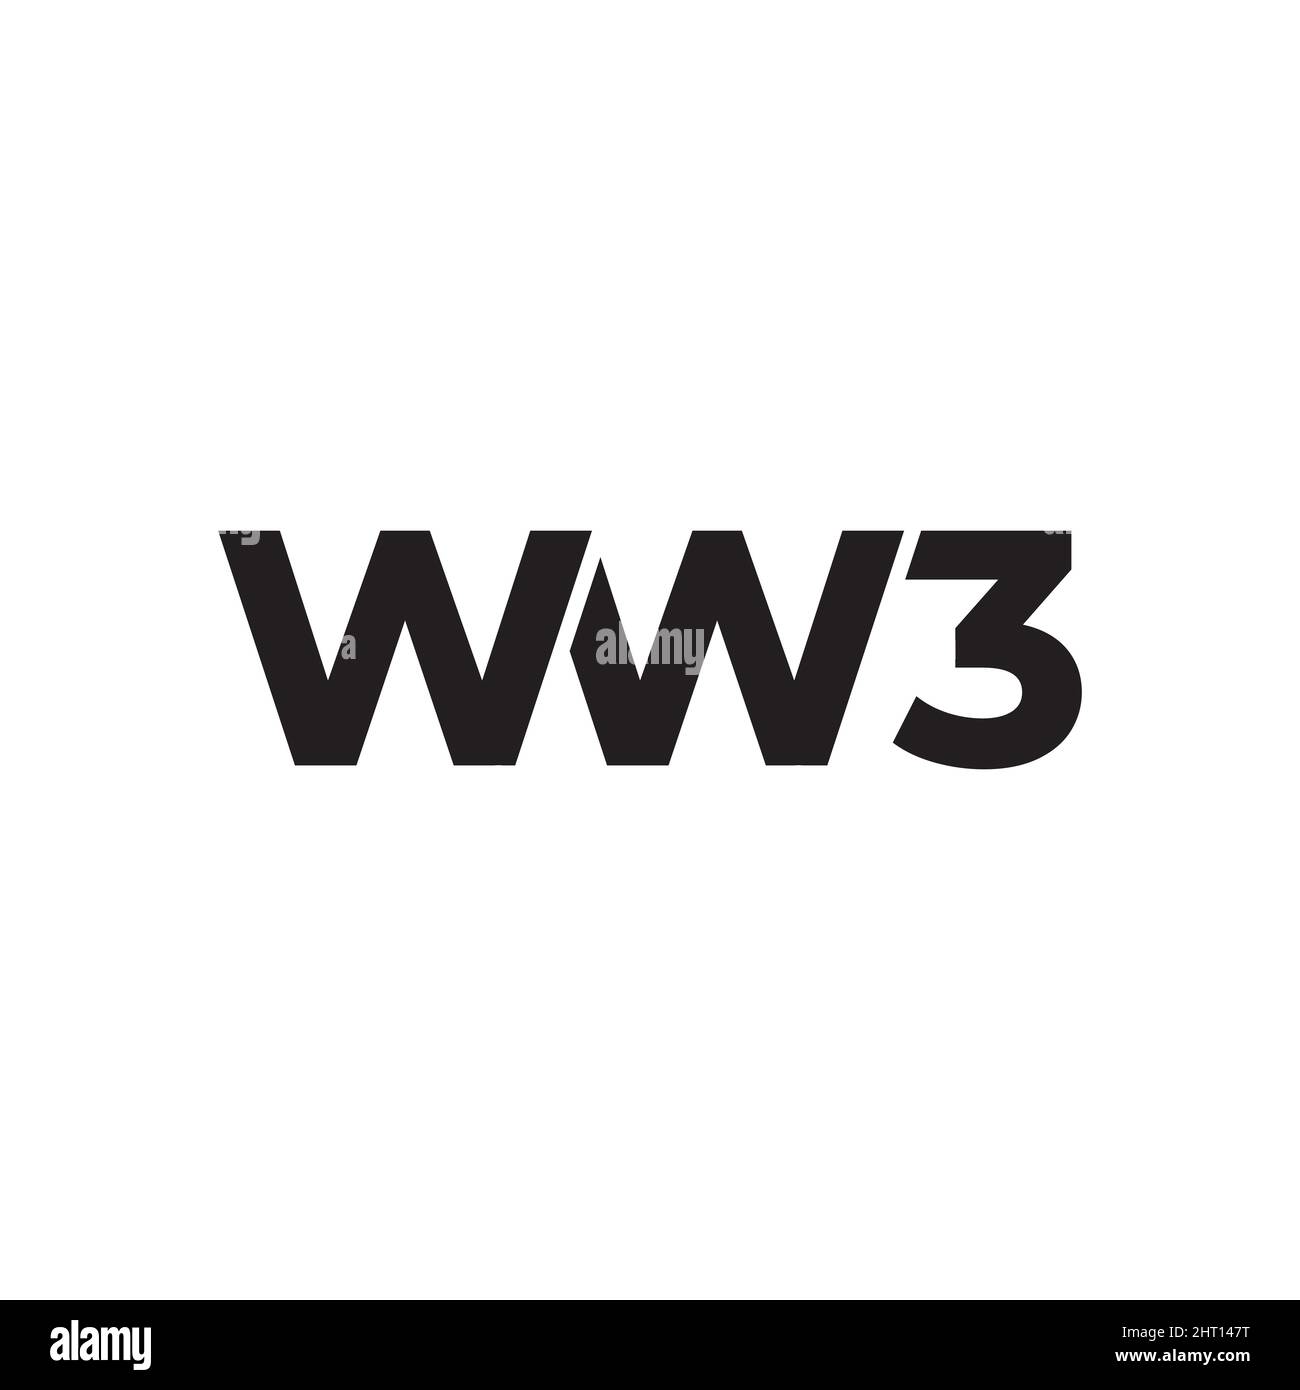 WW3 logo design vector isolated on white background. Stock Vector